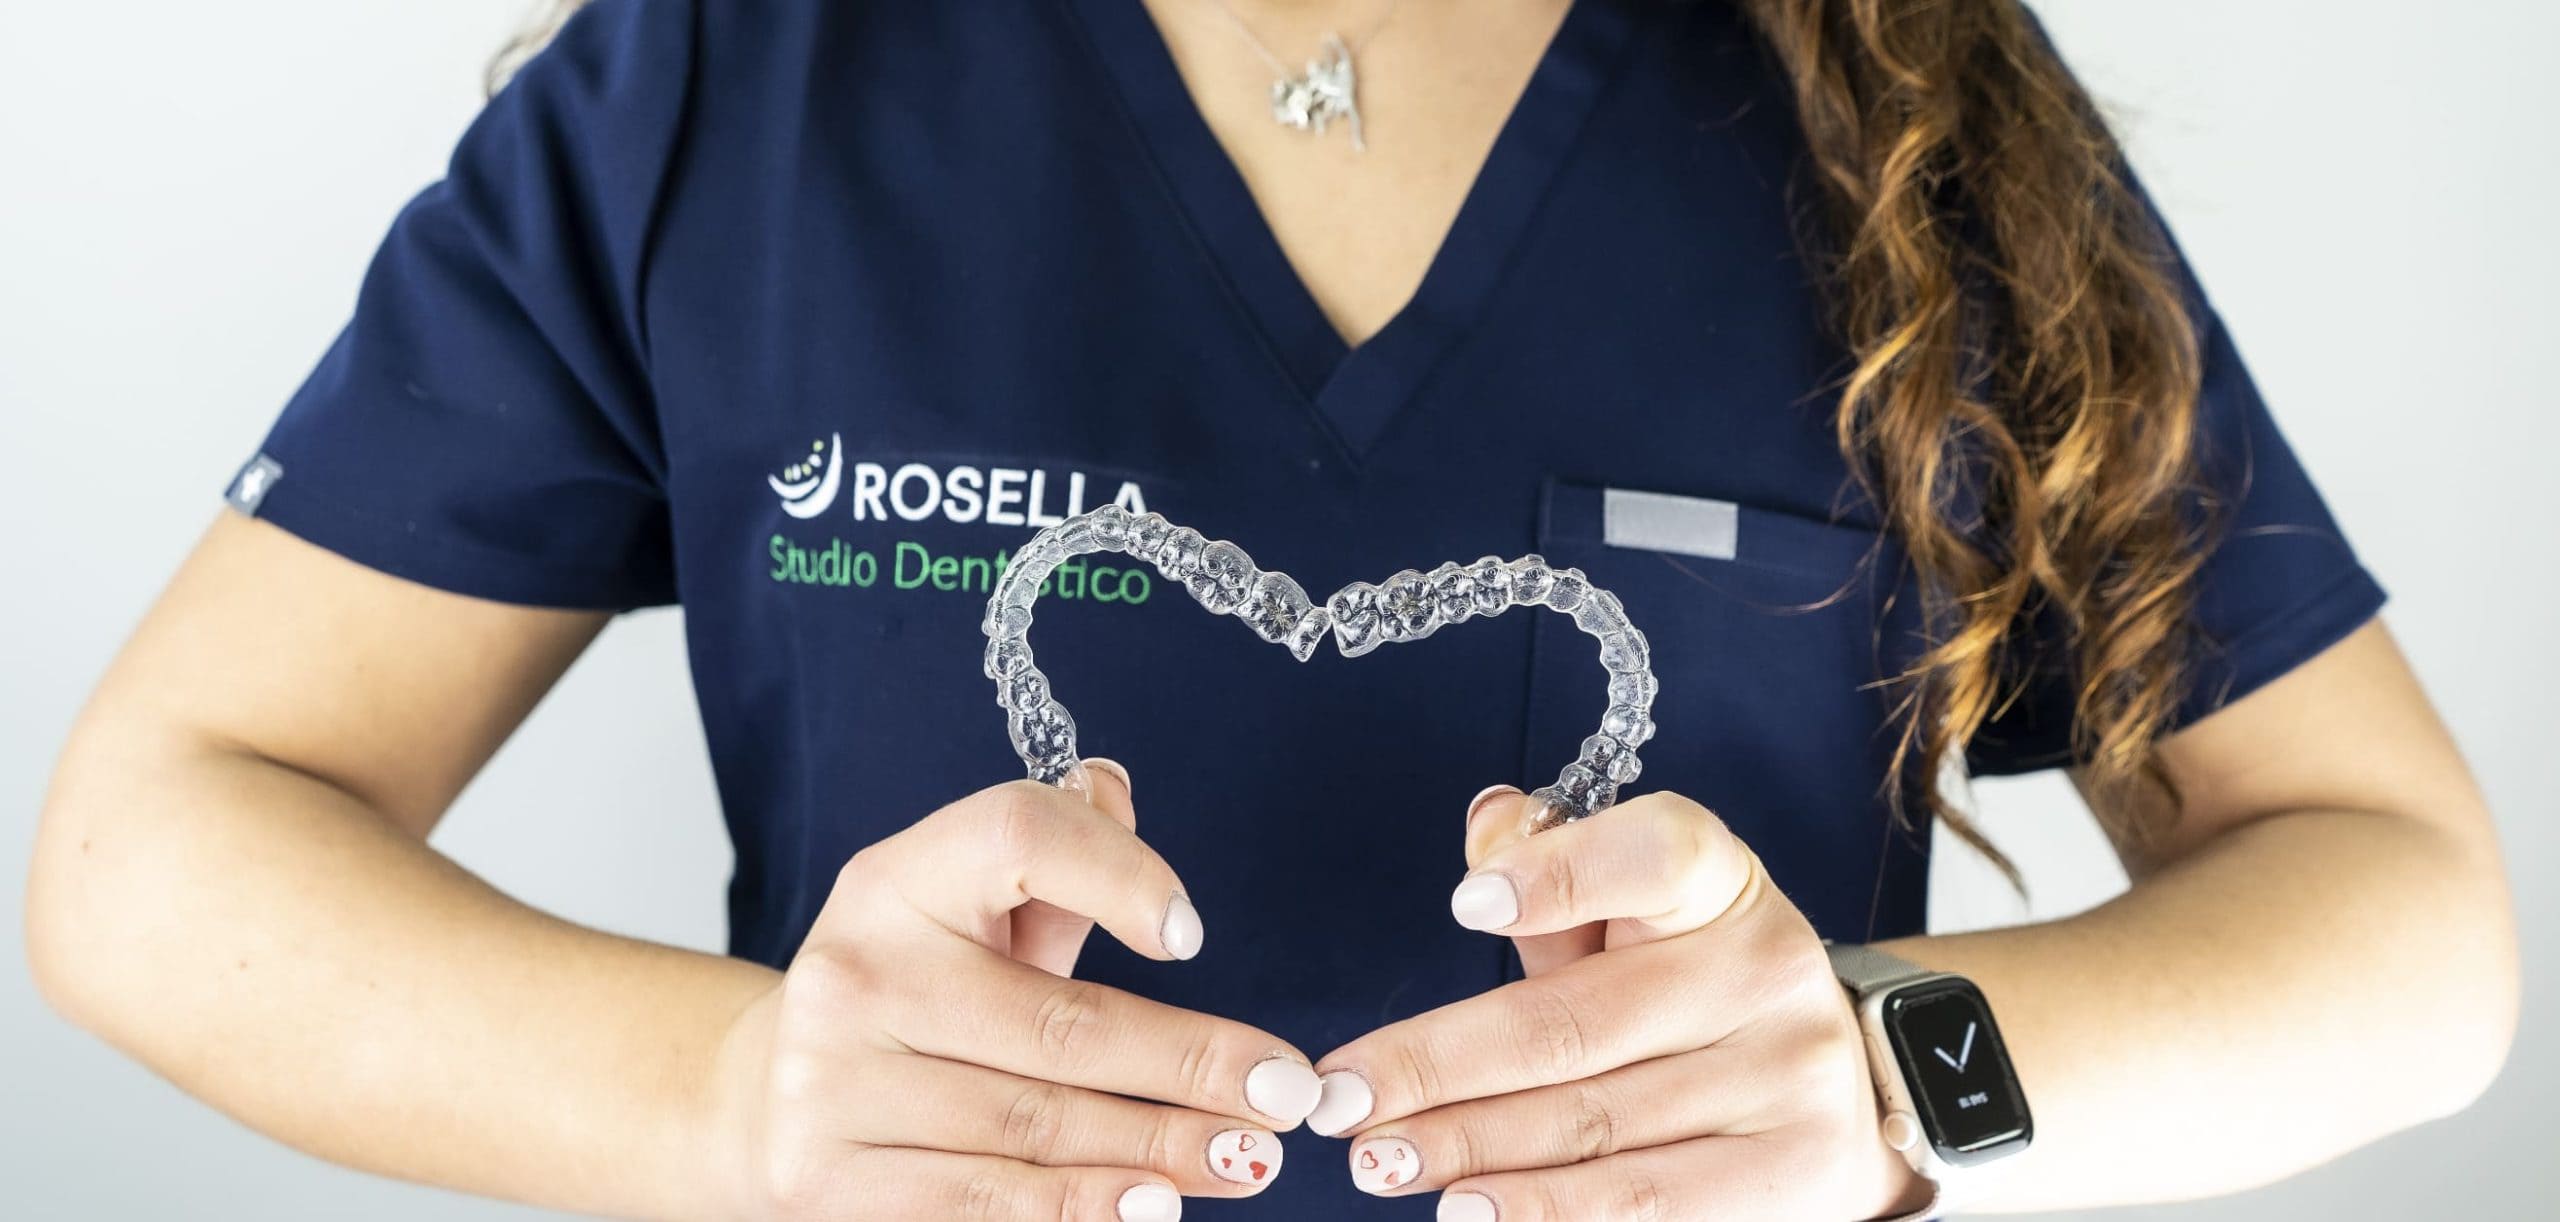 Studio-dentistico-Rosella-_-Mascherina-new